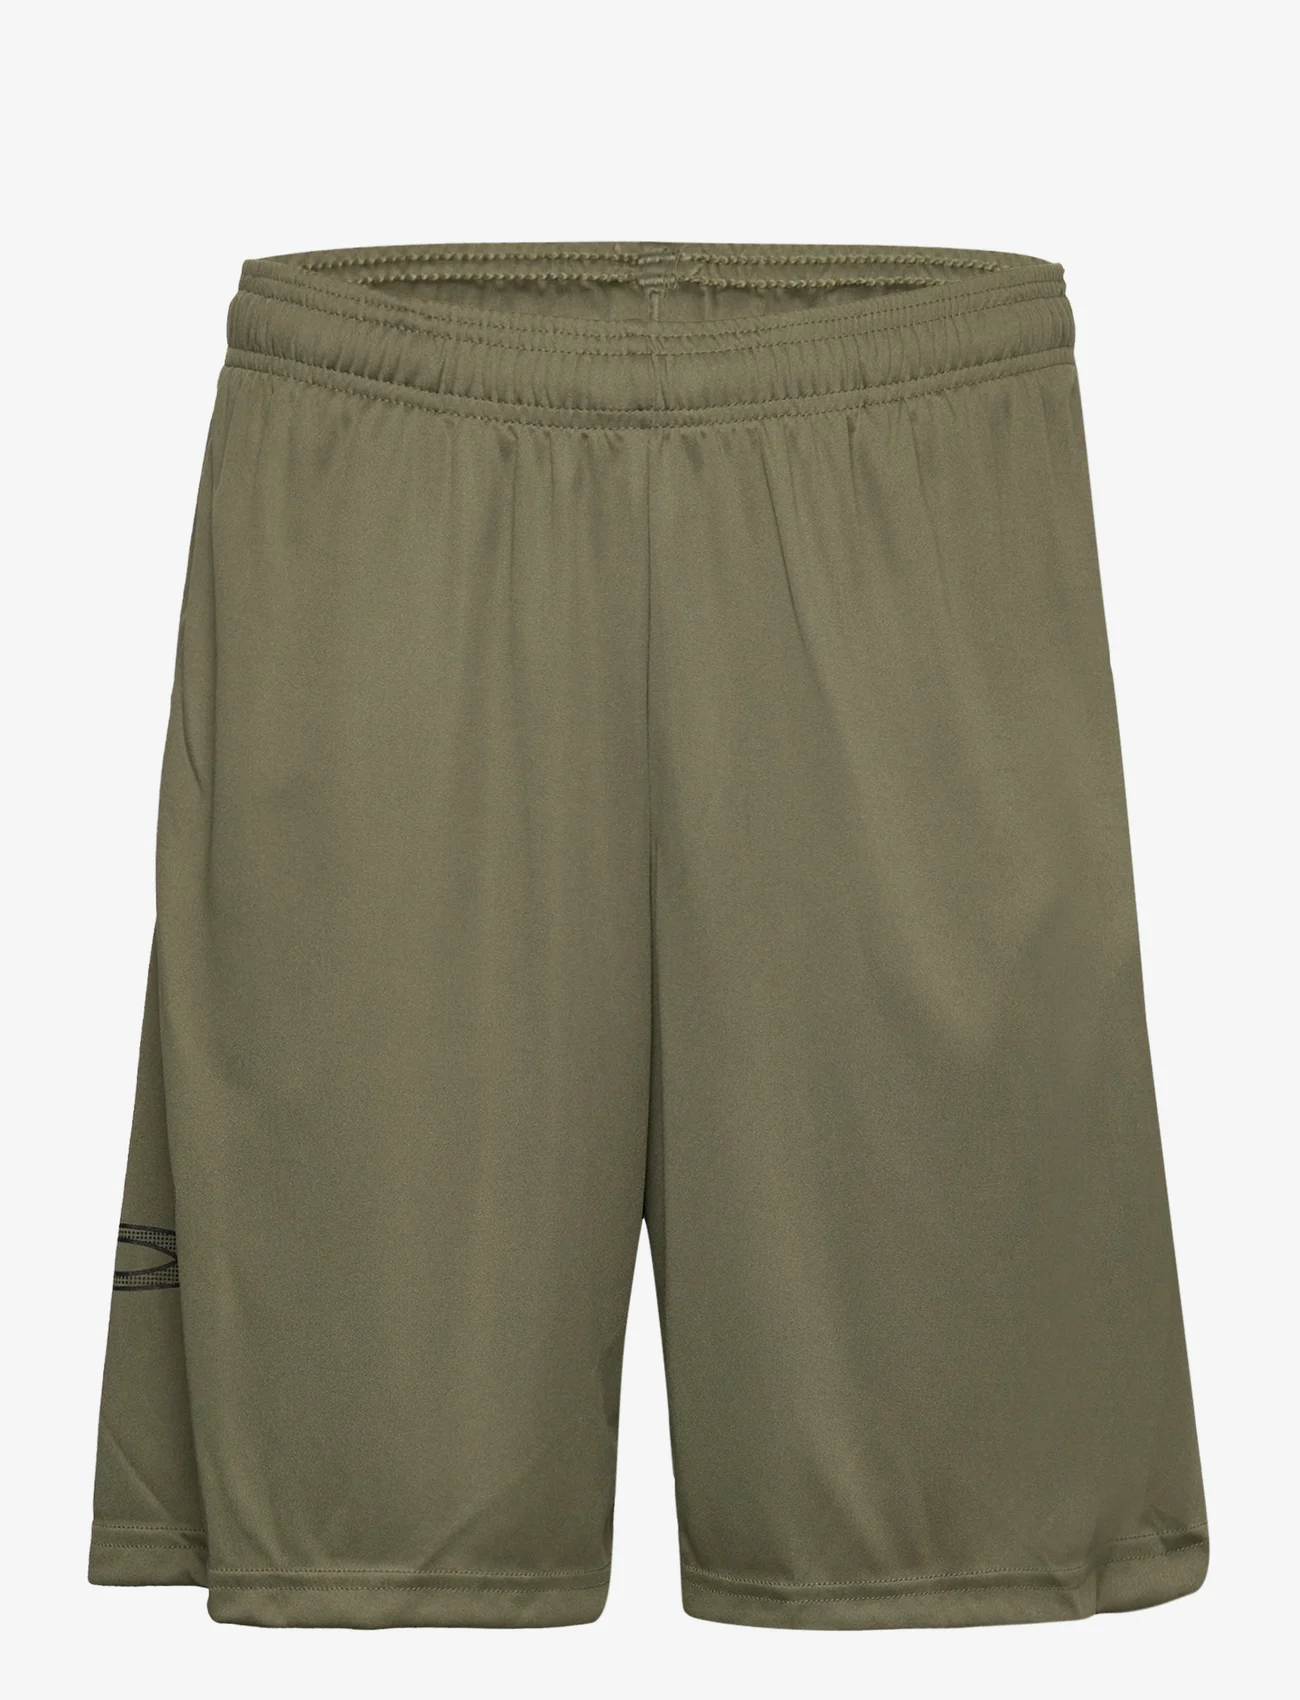 Under Armour - UA TECH GRAPHIC SHORT - training shorts - marine od green - 0